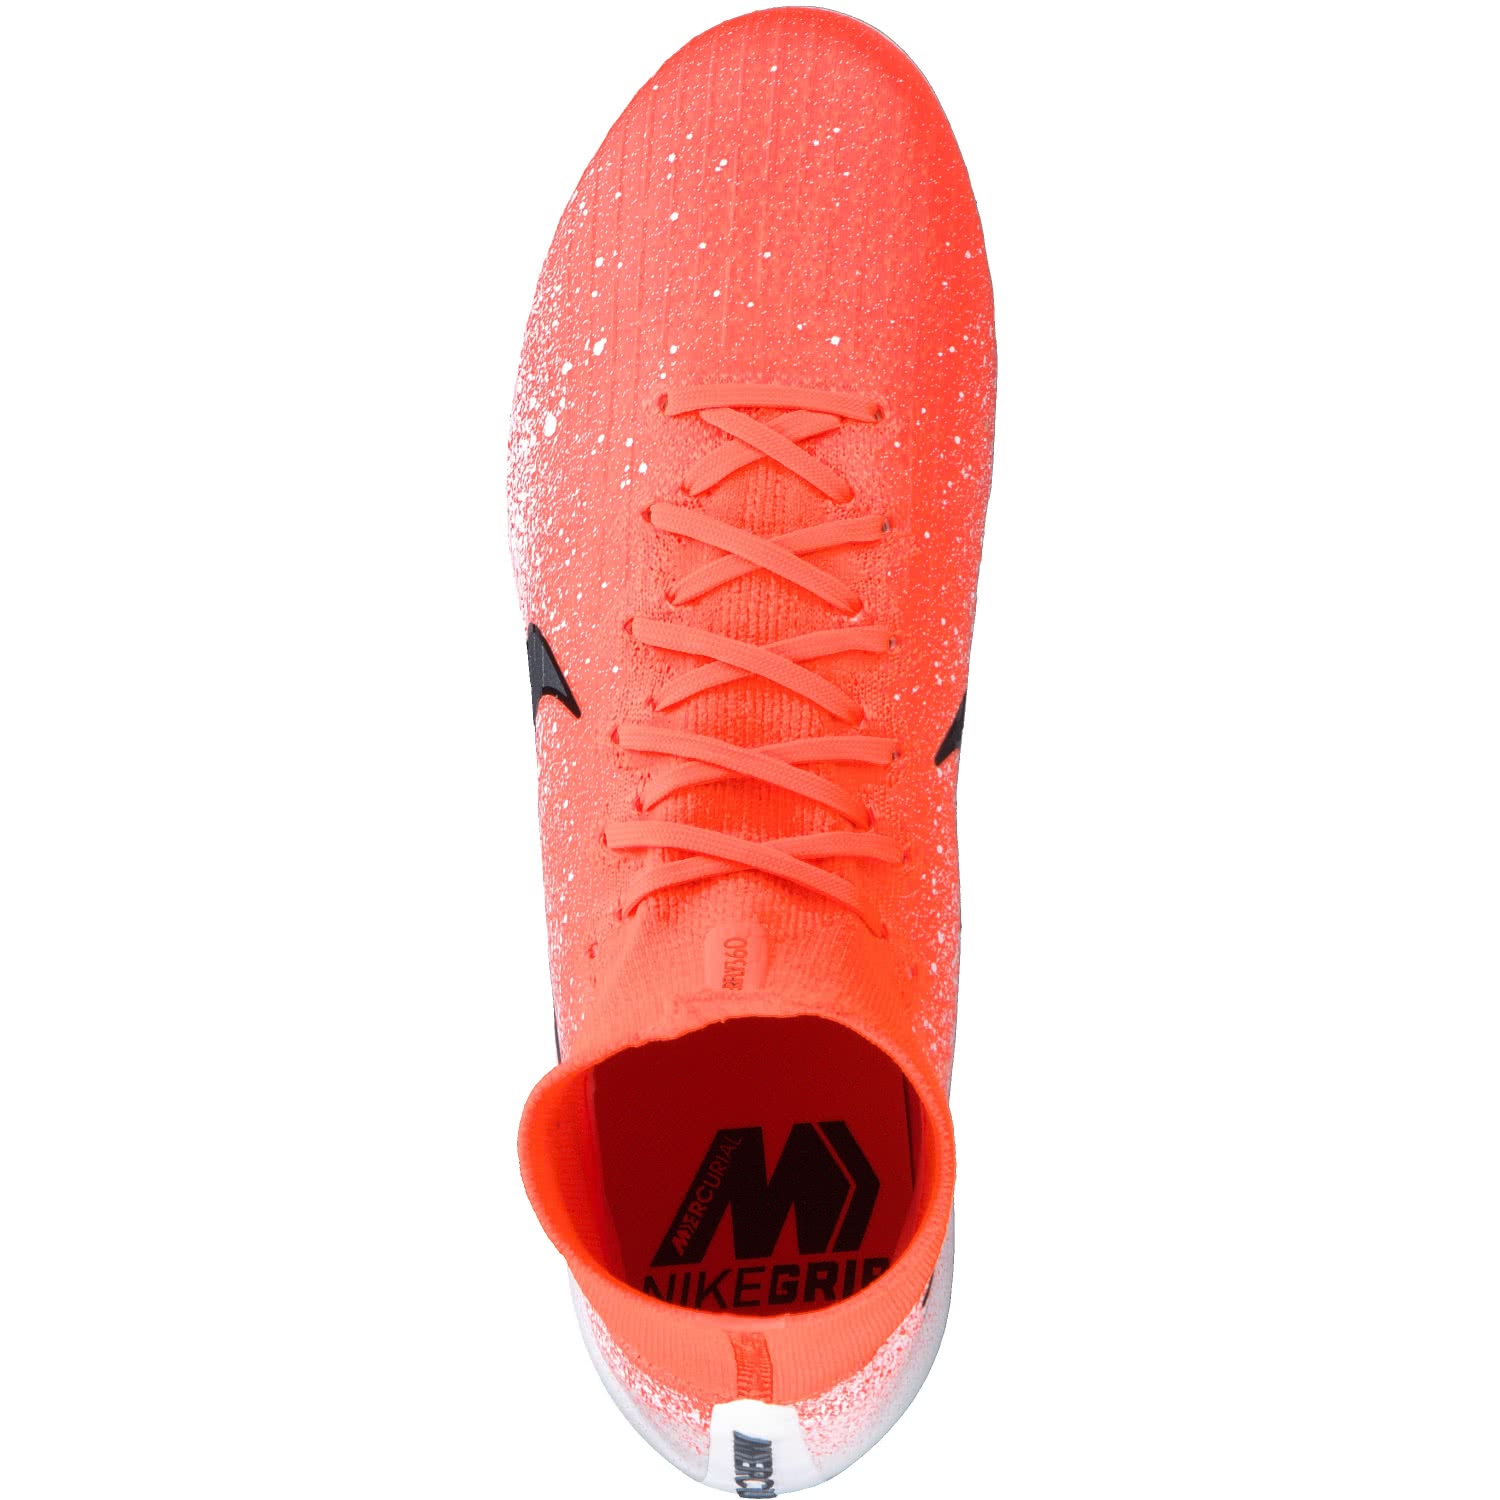 Nike JR. hypervenomx Phelon 3 Ic Indoor Football Boots (Indoor, Boy